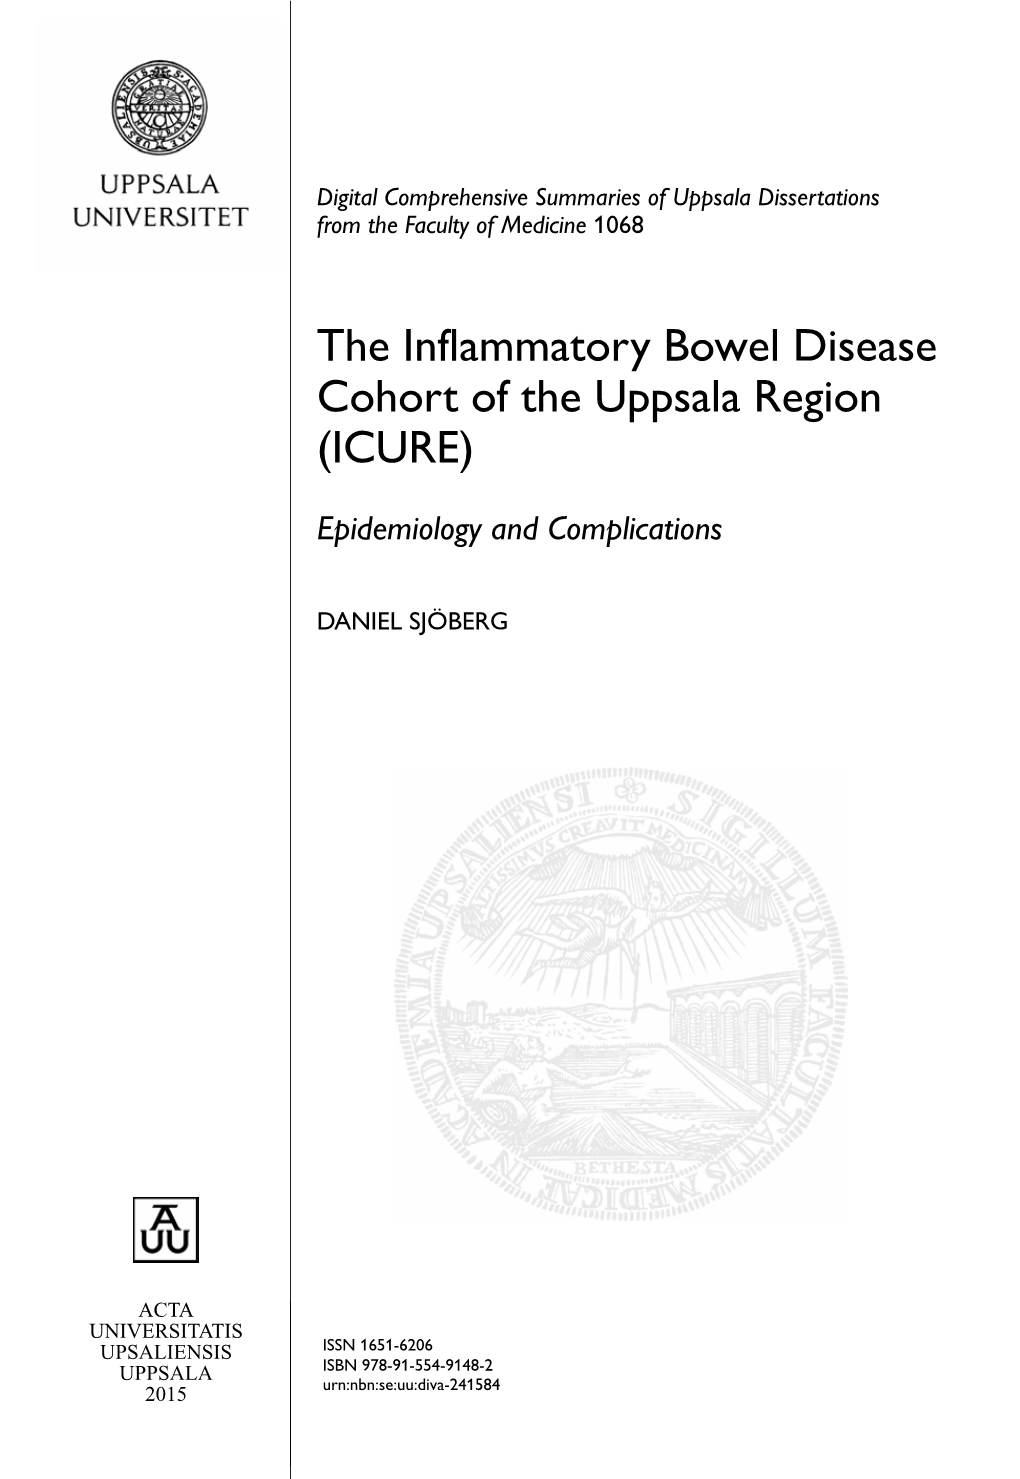 The Inflammatory Bowel Disease Cohort of the Uppsala Region (ICURE)